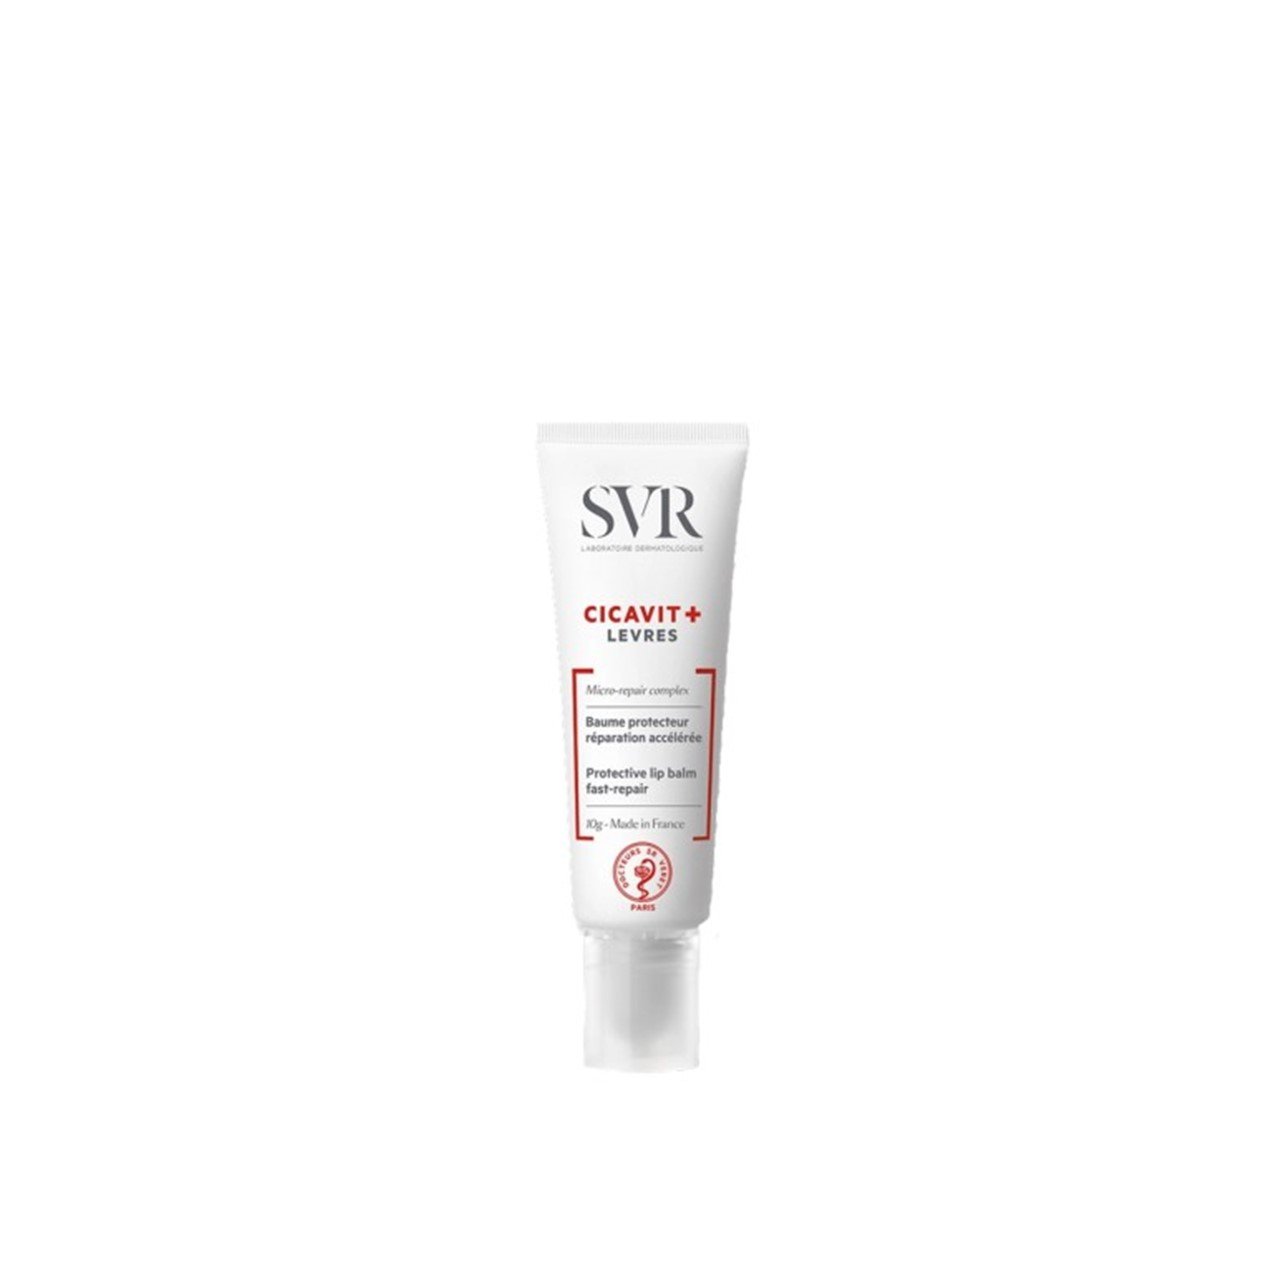 SVR Cicavit+ Protective Lip Balm Fast-Repair 10g (0.35oz)